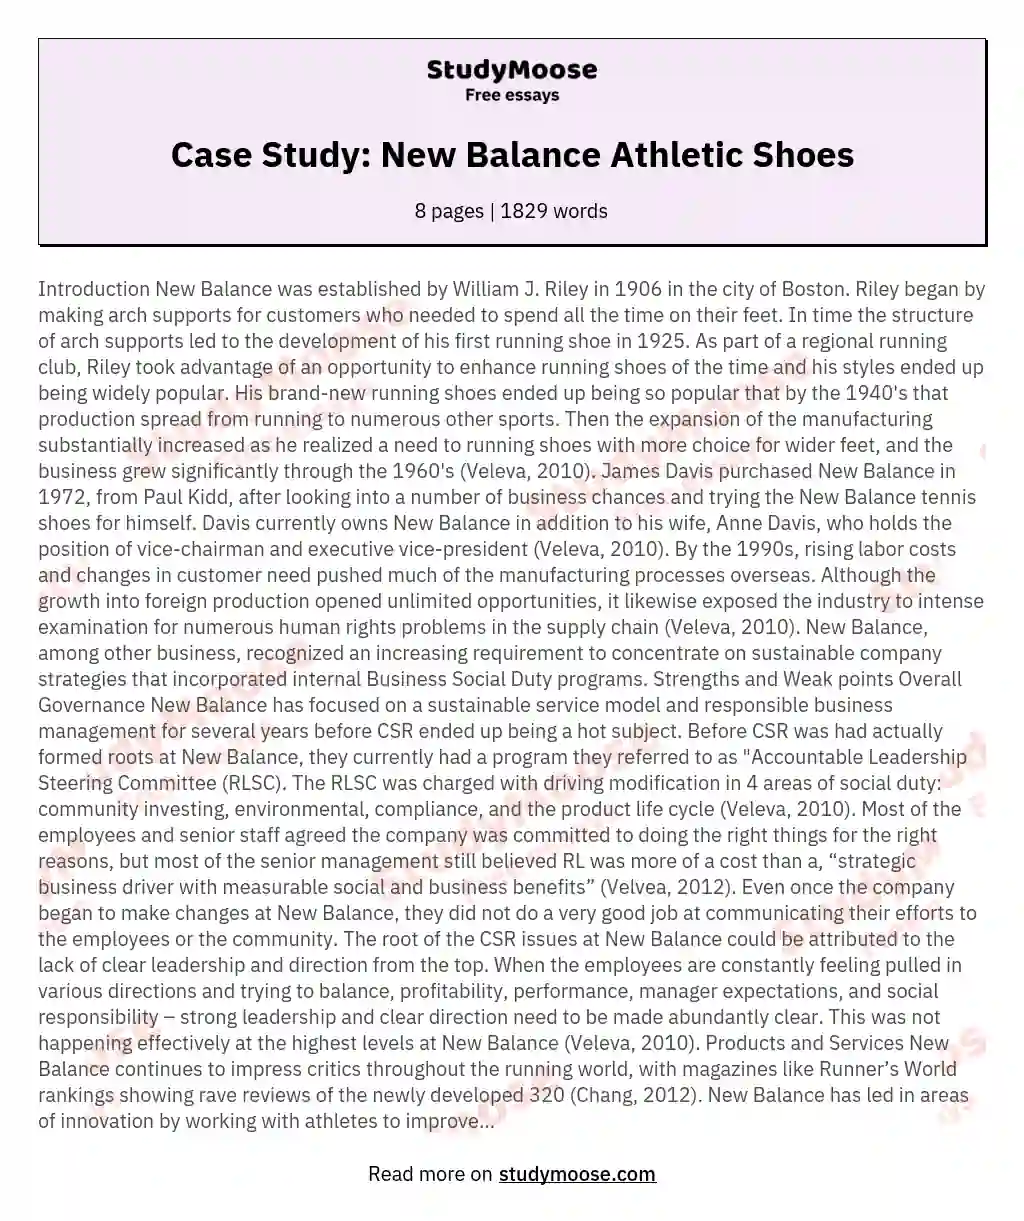 Case Study: New Balance Athletic Shoes